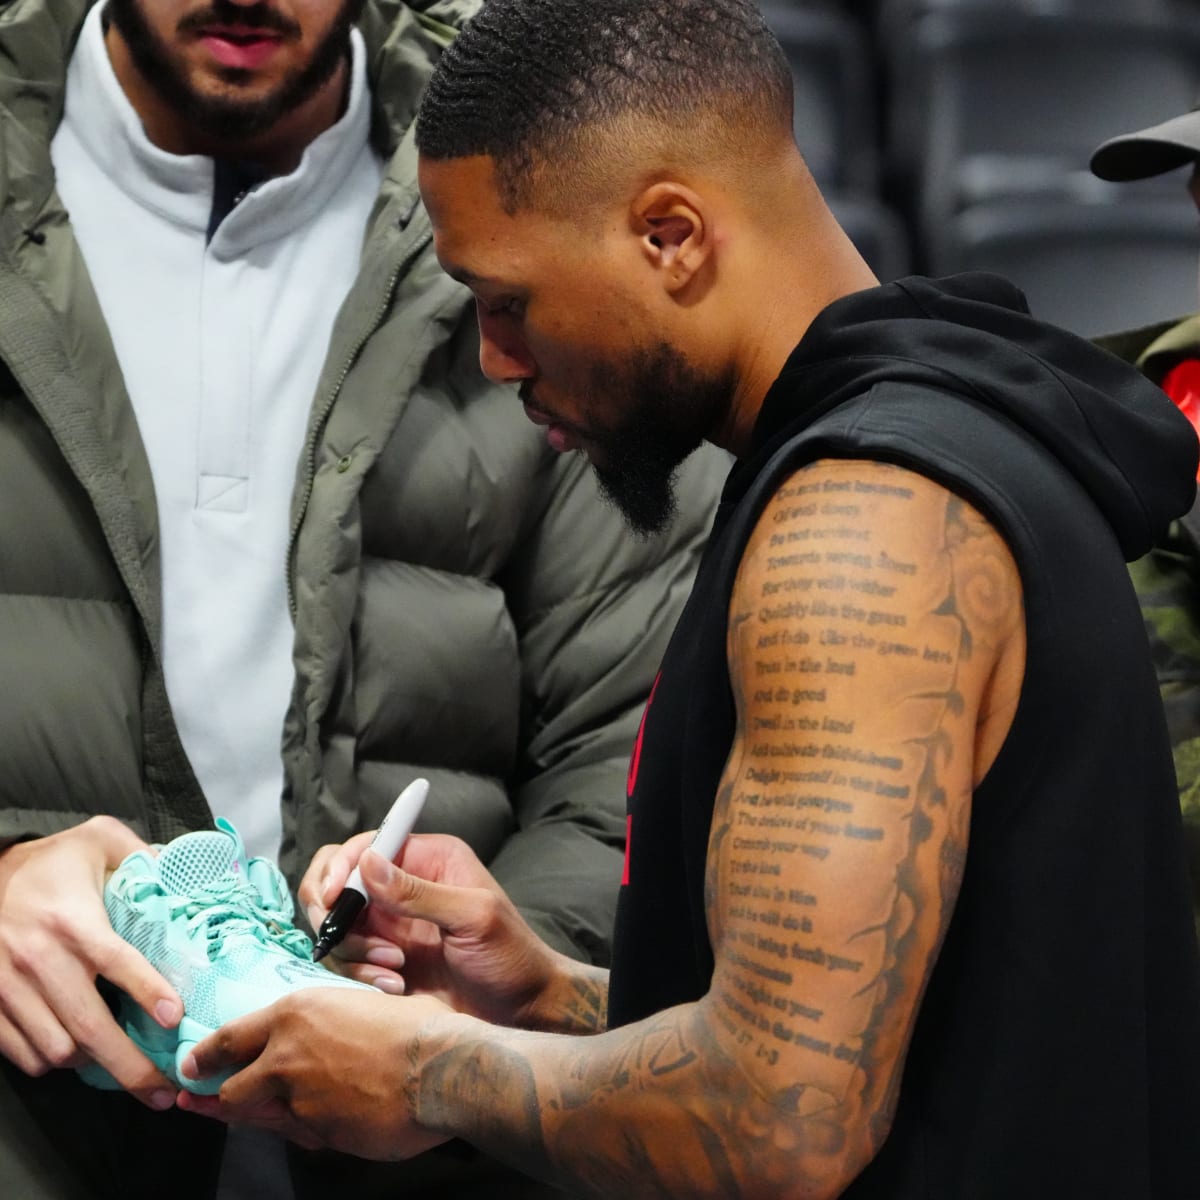 Adidas Releases Third Iteration Of Damian Lillard's Signature